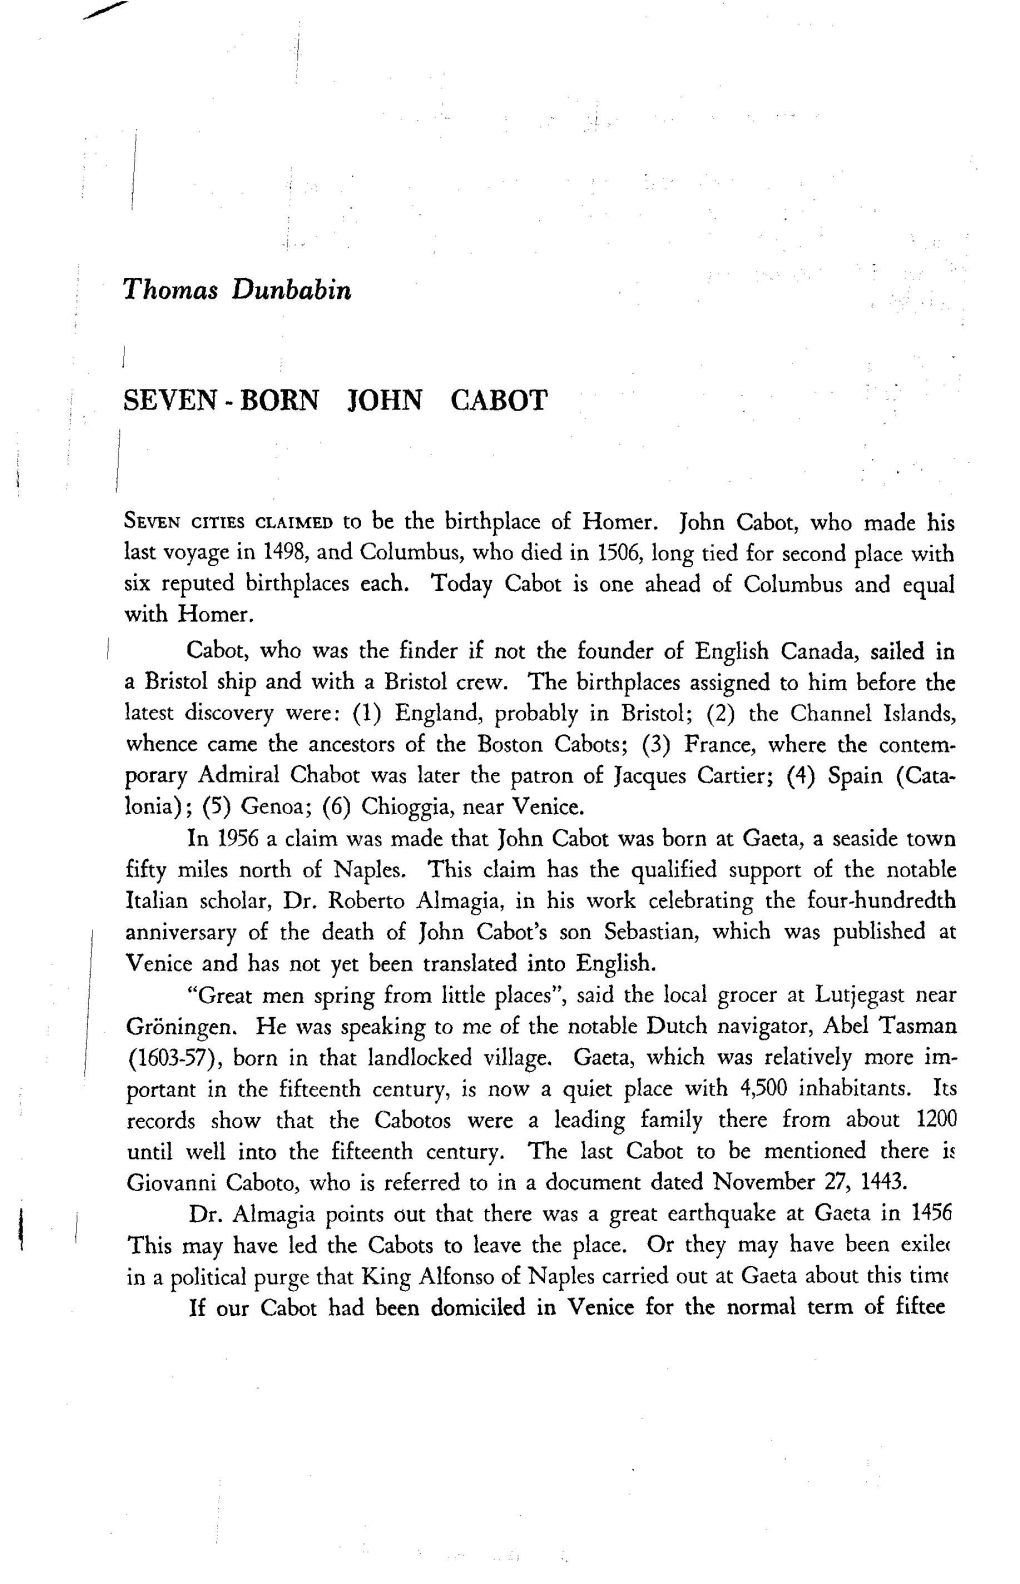 Born John Cabot